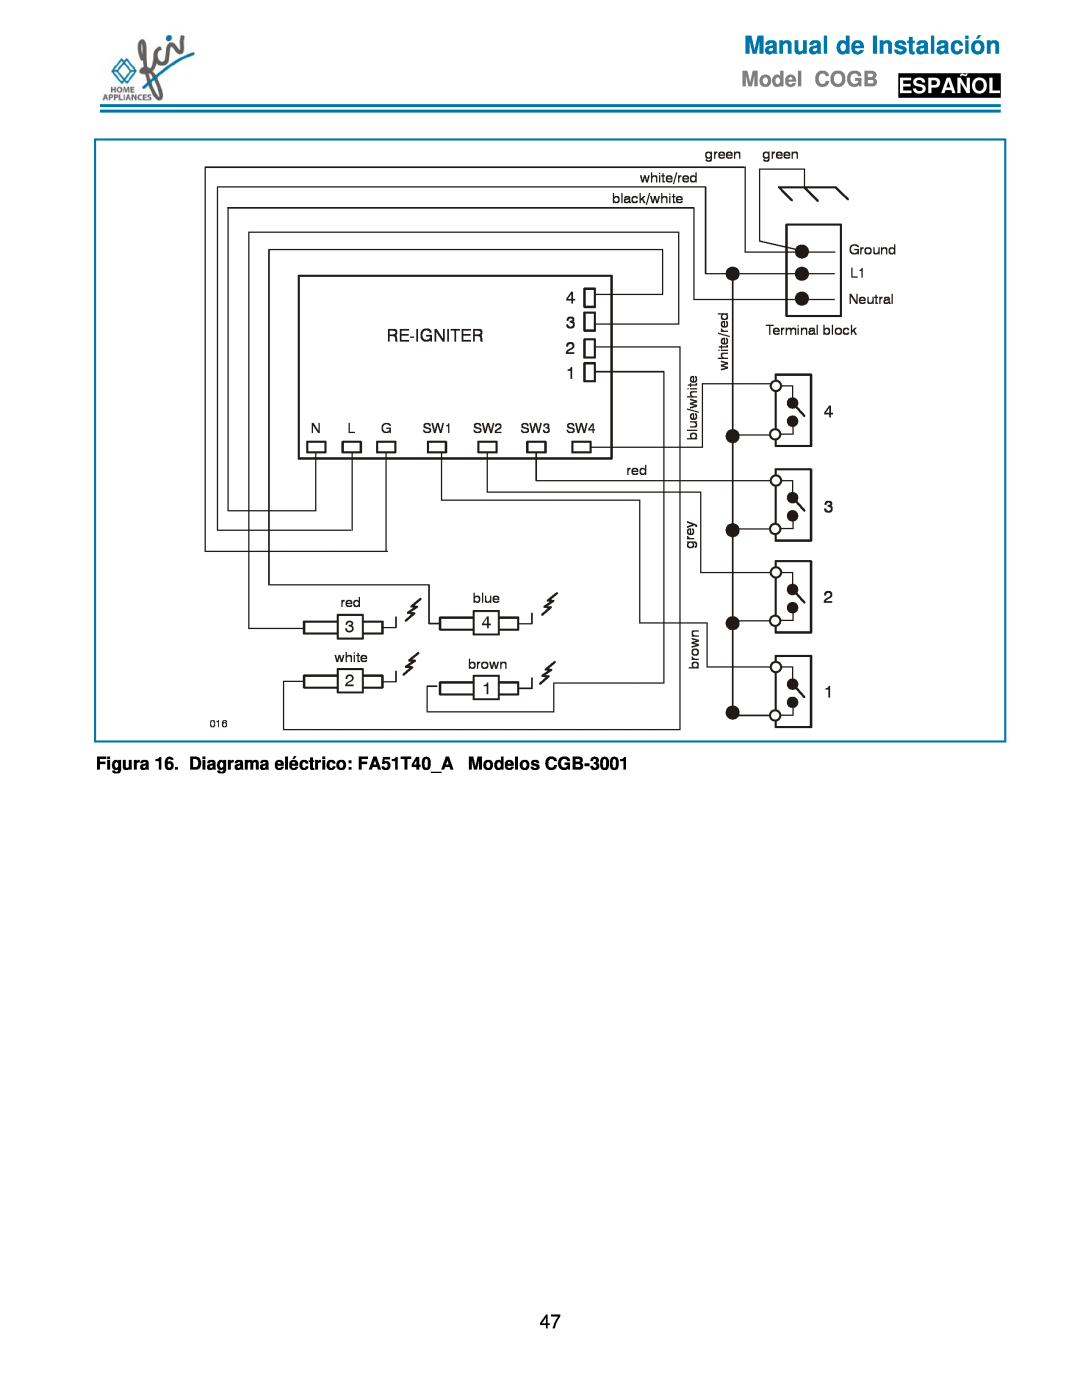 FCI Home Appliances COGB 33062/L/SS Figura 16. Diagrama eléctrico FA51T40A, Modelos CGB-3001, Manual de Instalación 